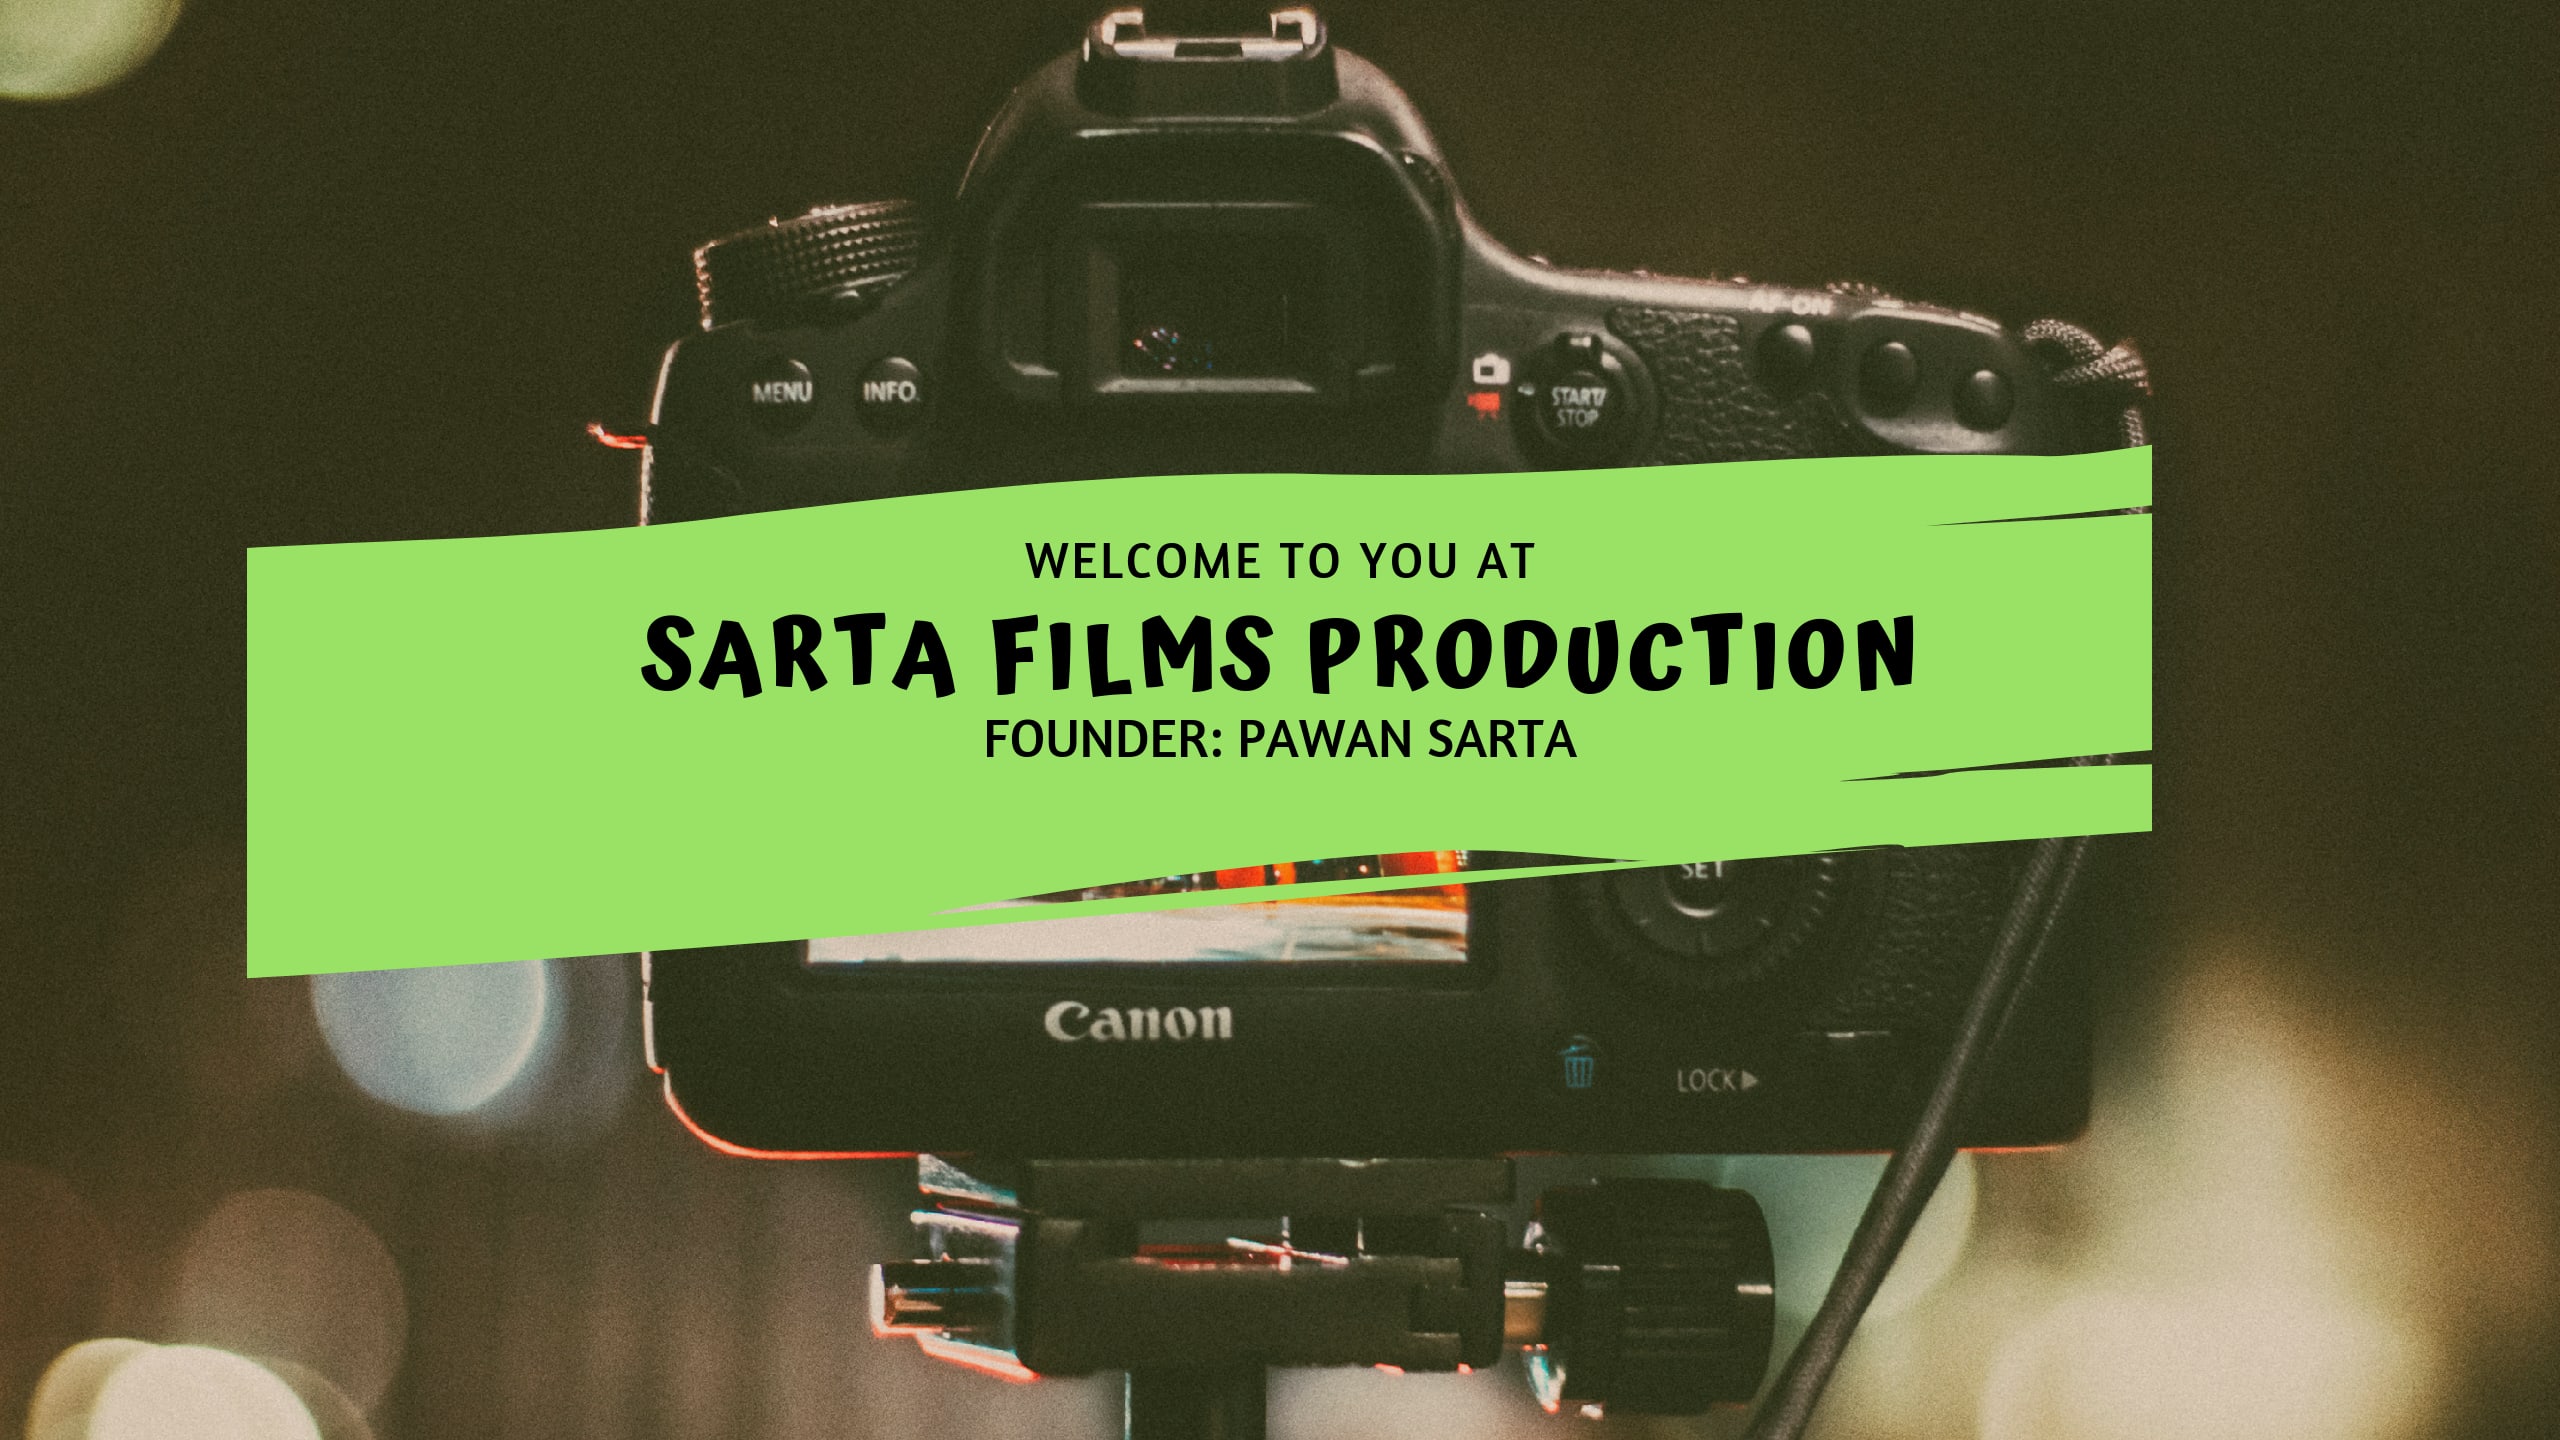 Sarta Films Production